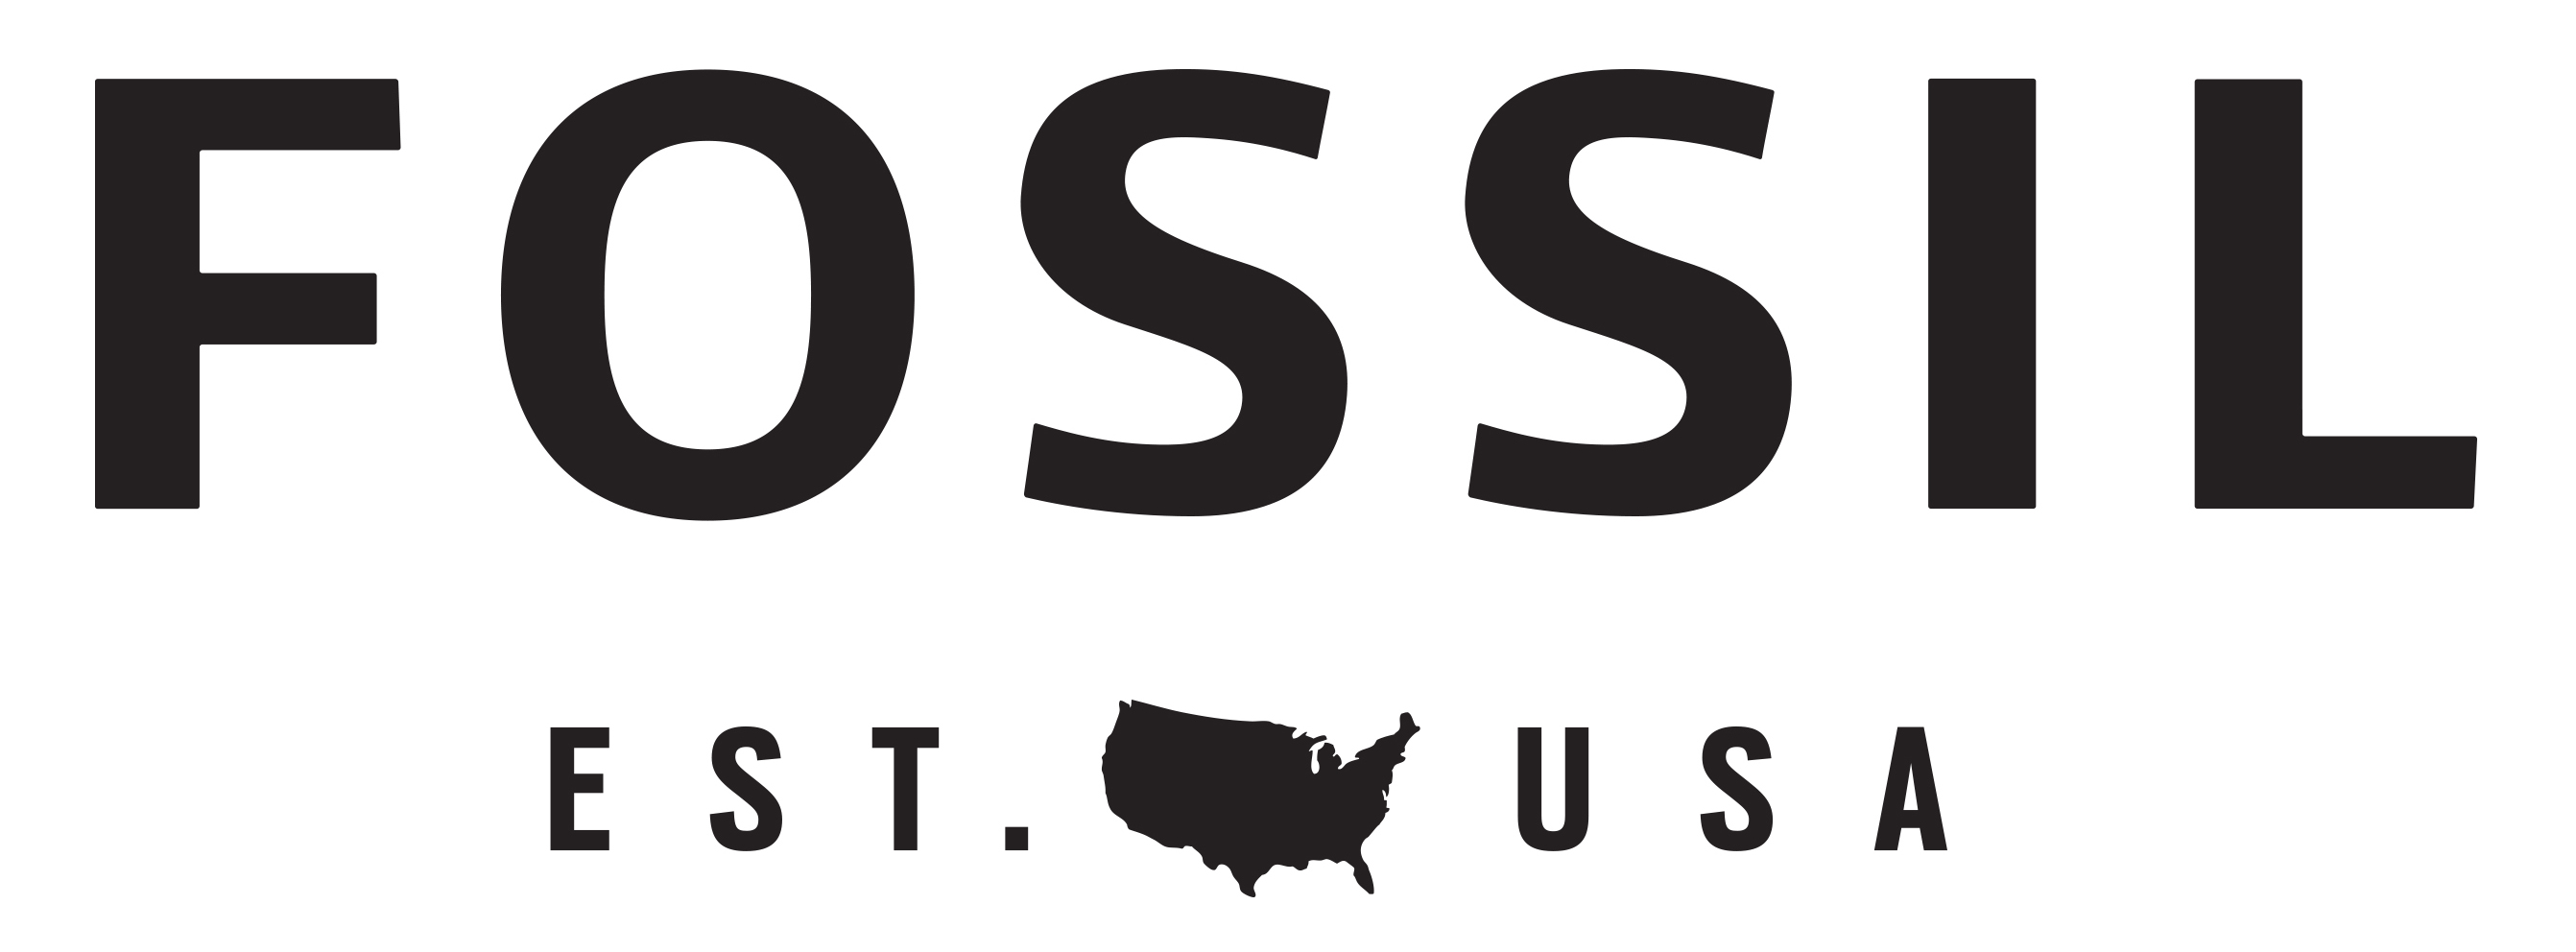 fossil-logo-big.jpg